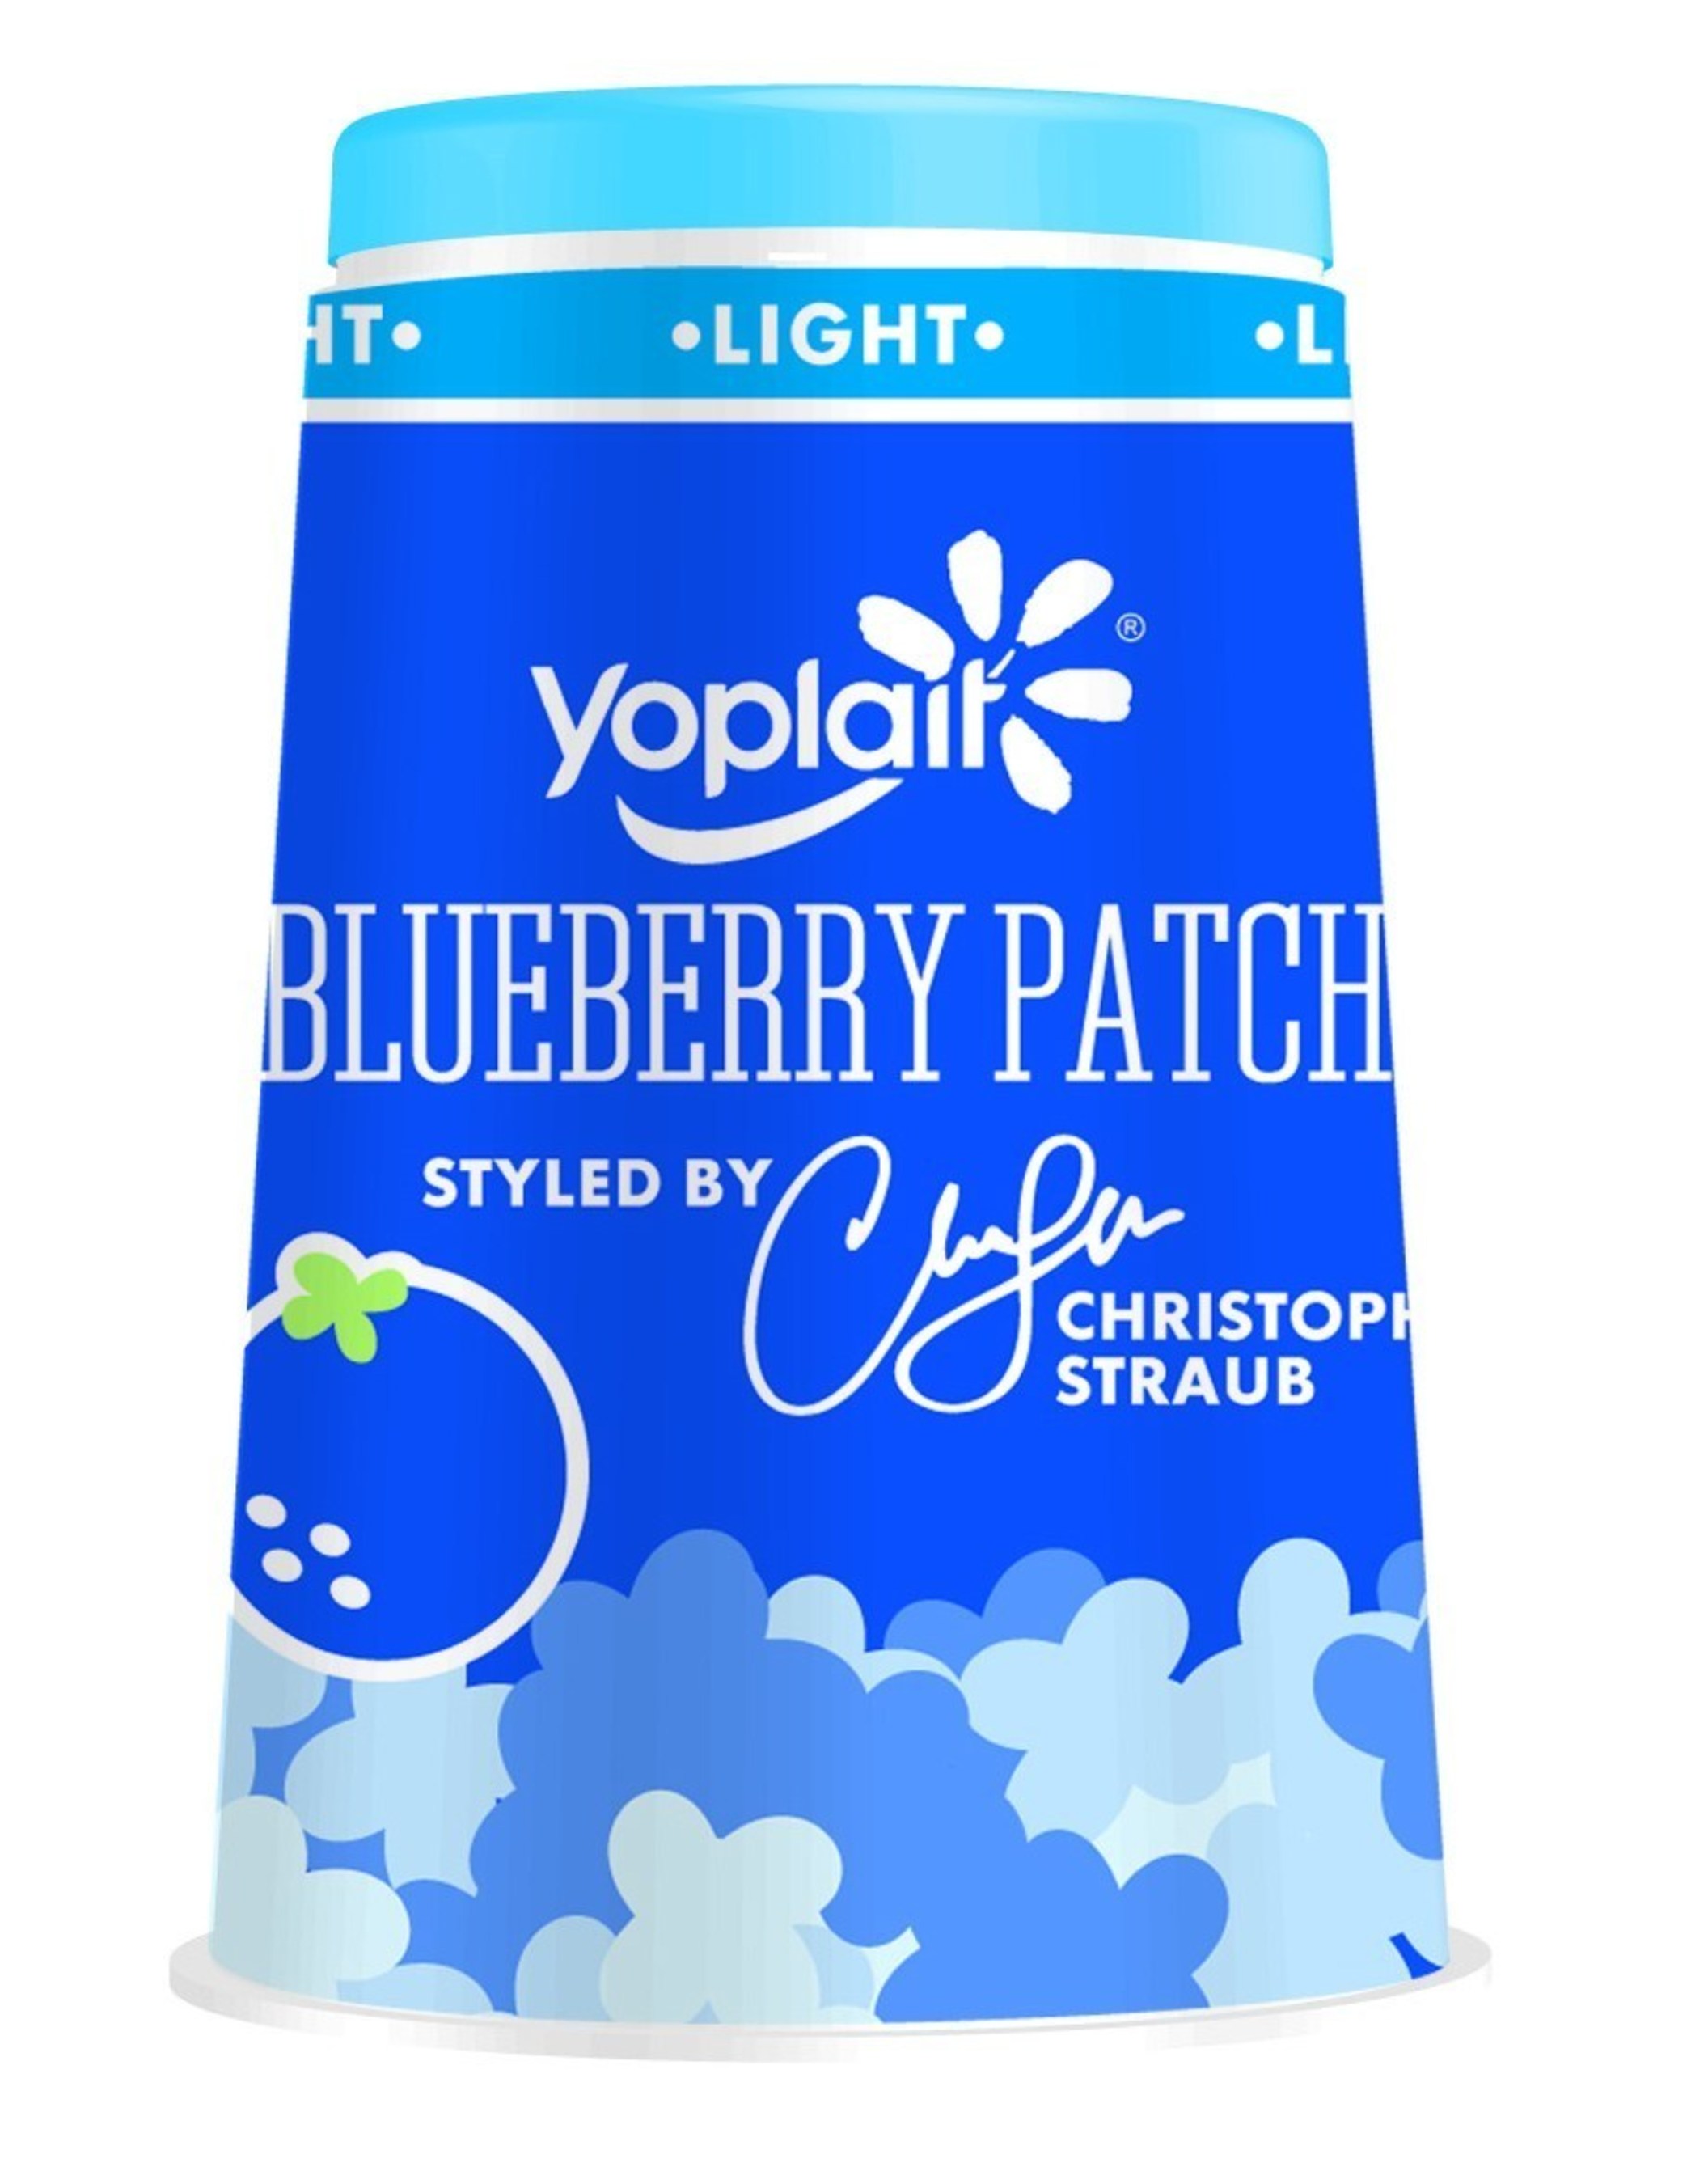 The Yoplait Light Blueberry Patch cup design, part of the Yoplait Signature Collection.